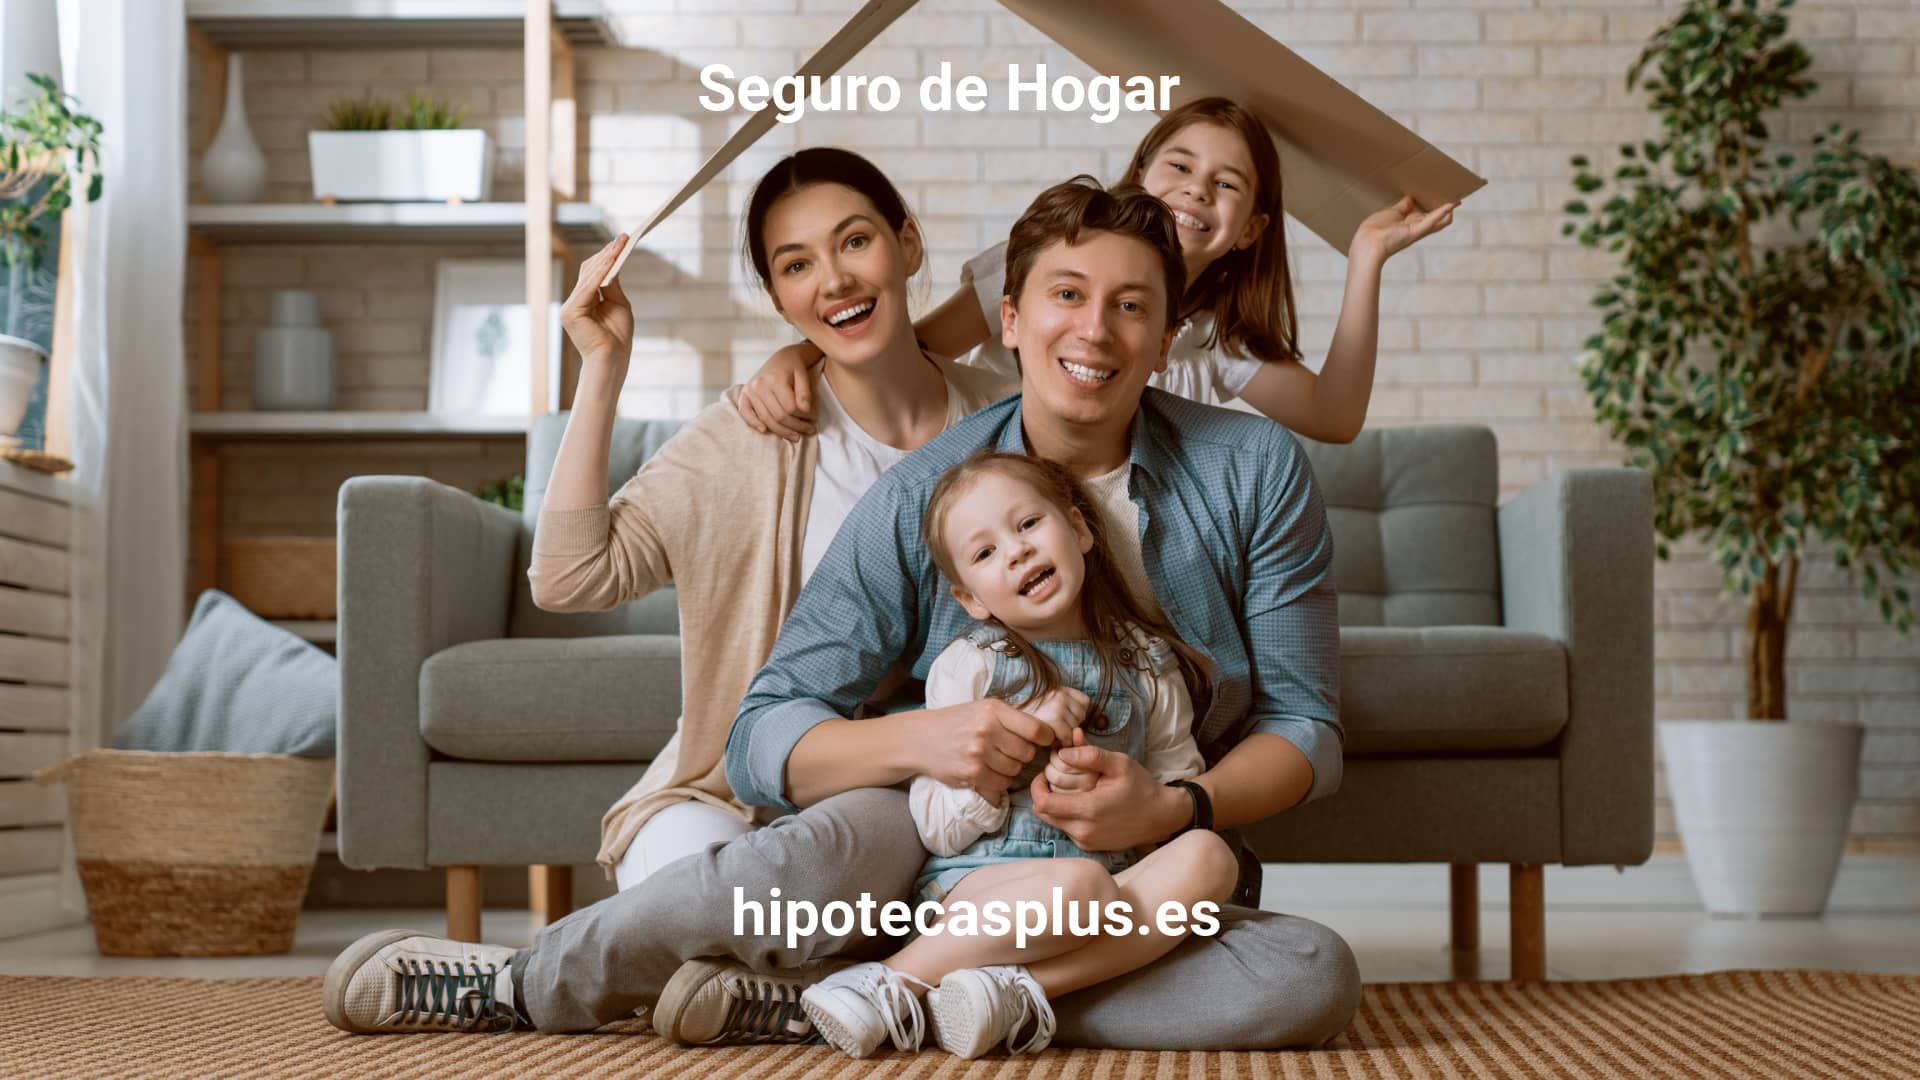 https://www.hipotecasplus.es/wp-content/uploads/HipotecasPlus-Seguro-de-Hogar-.jpg